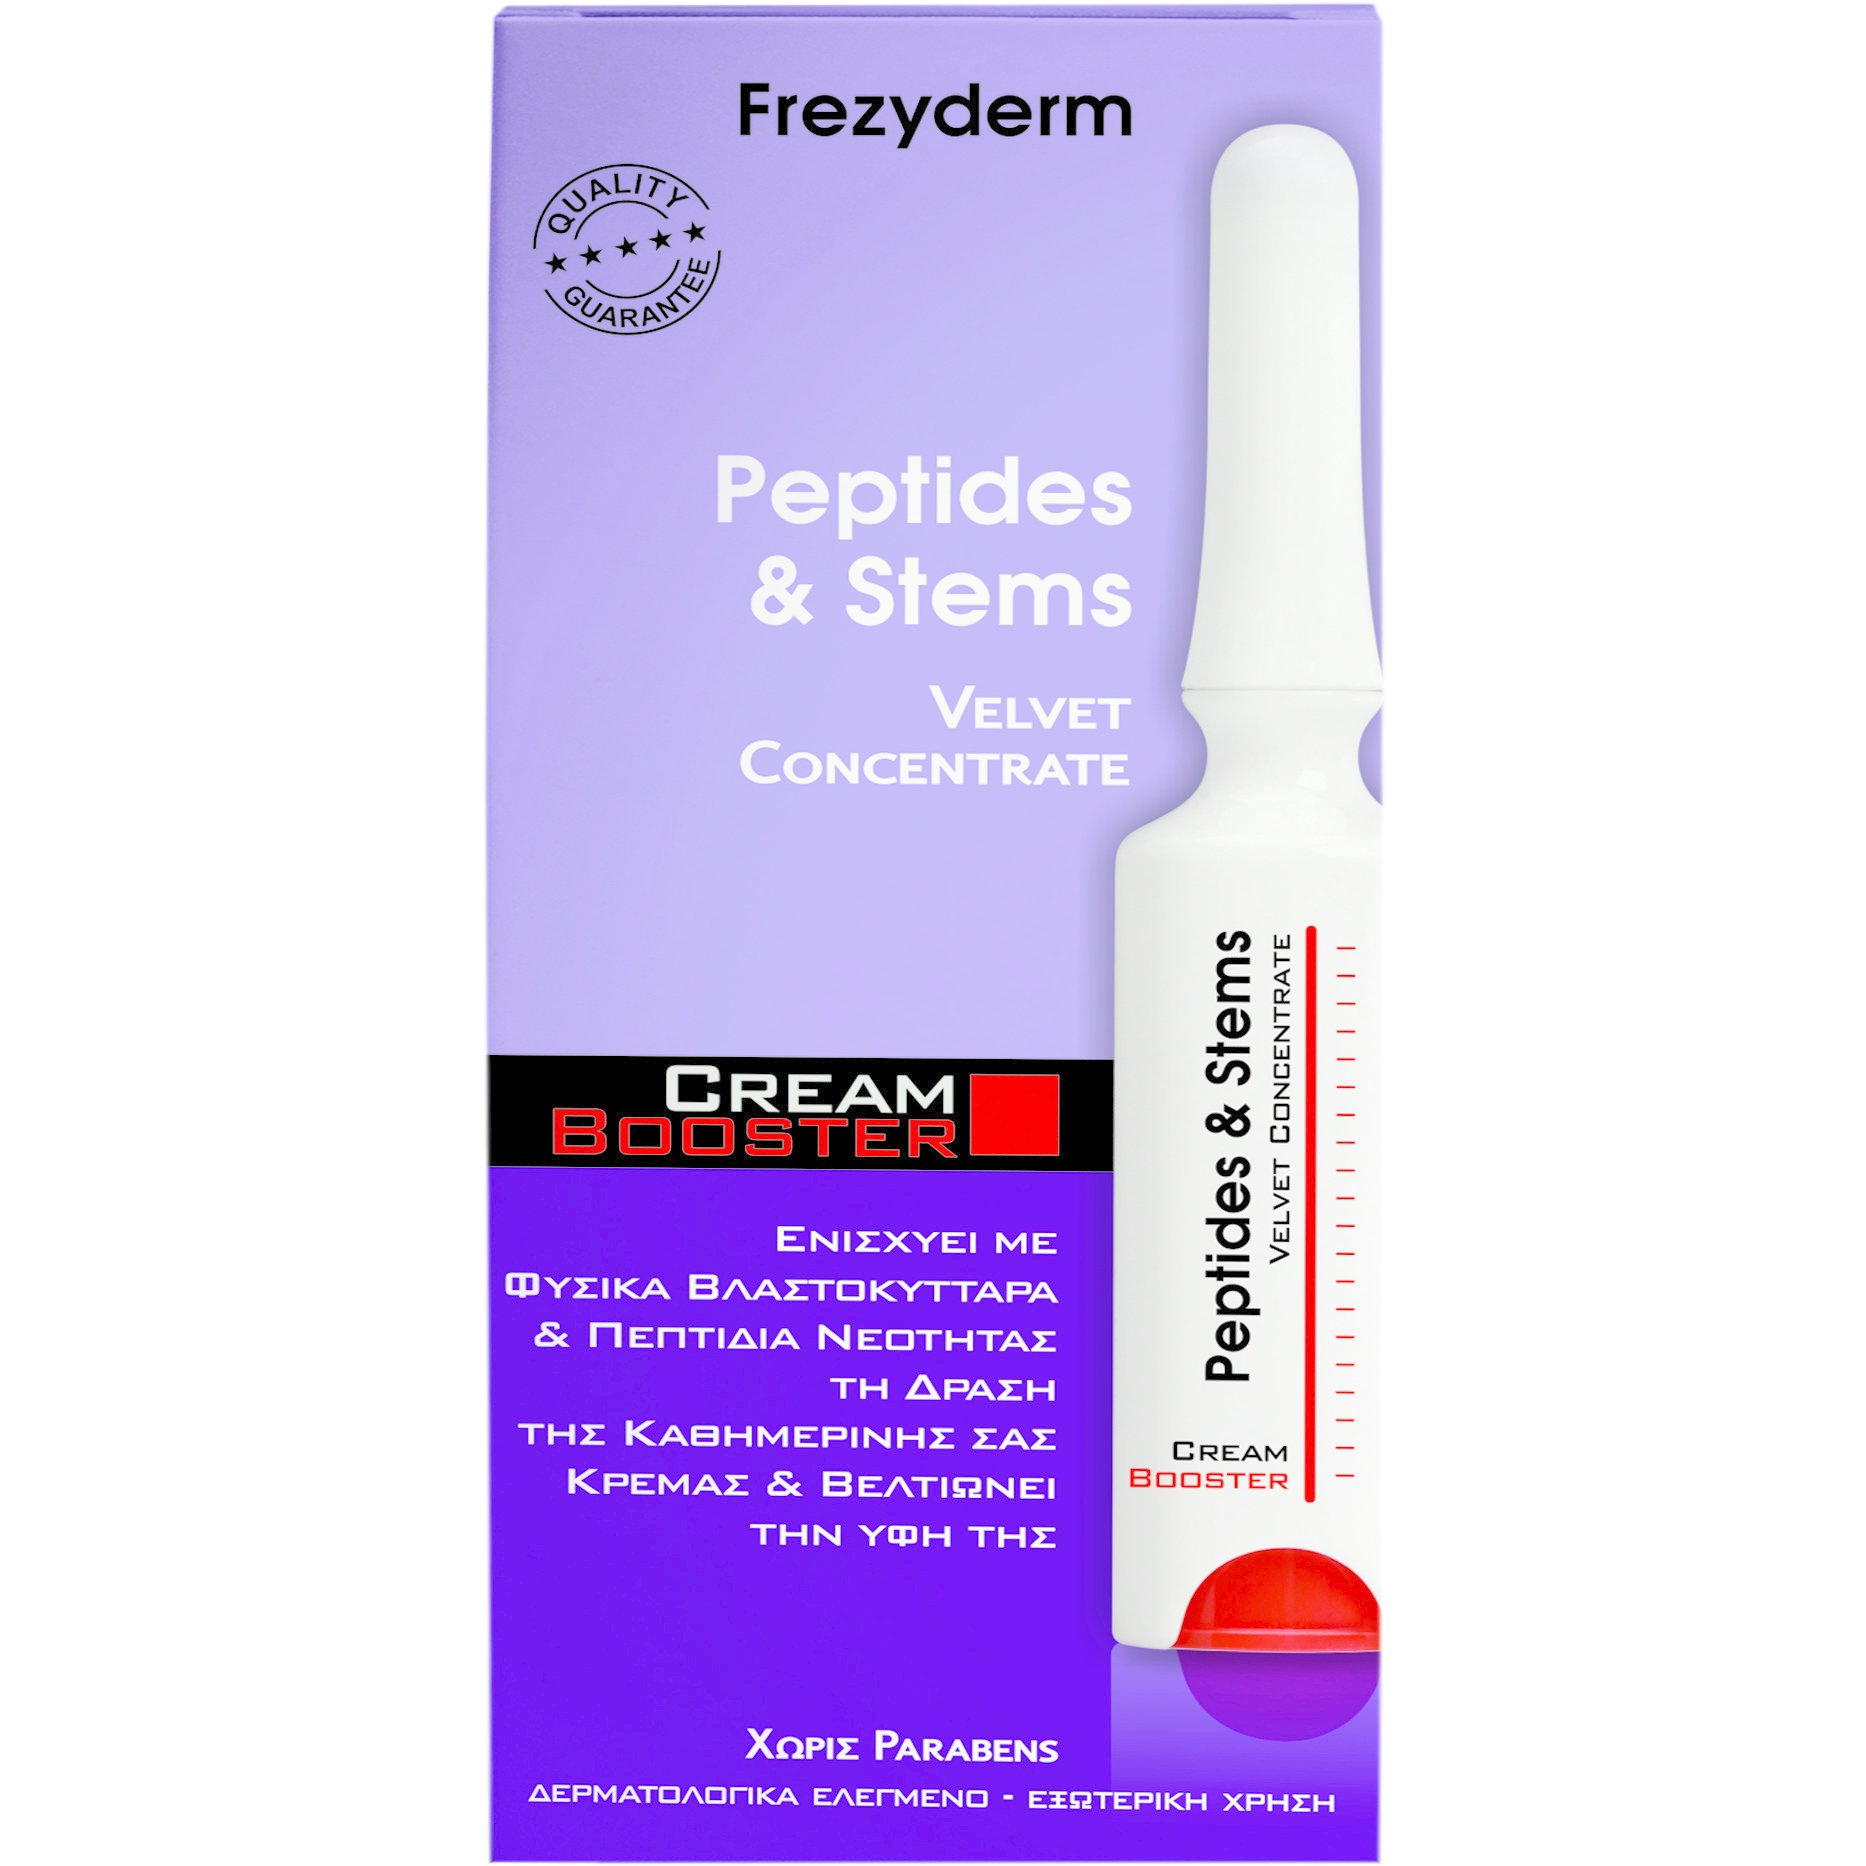 Frezyderm Peptides & Stems Cream Booster για Ενίσχυση του Επιδερμικού Μεταβολισμού & Bio-Lifting Effect 5ml